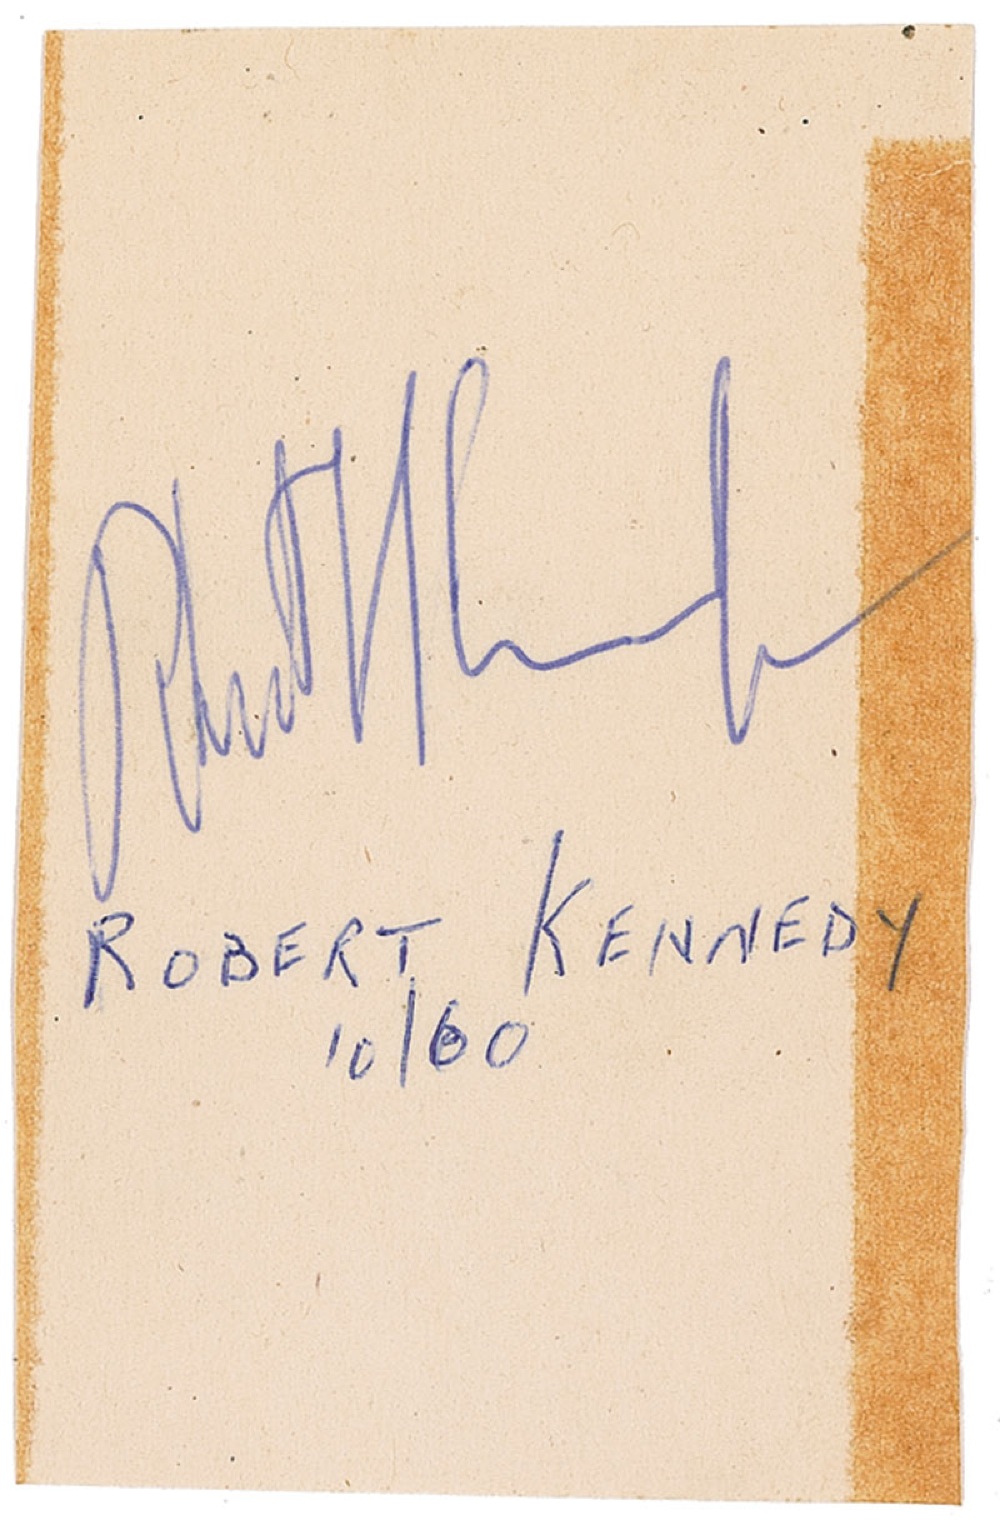 Lot #305 Robert F. Kennedy